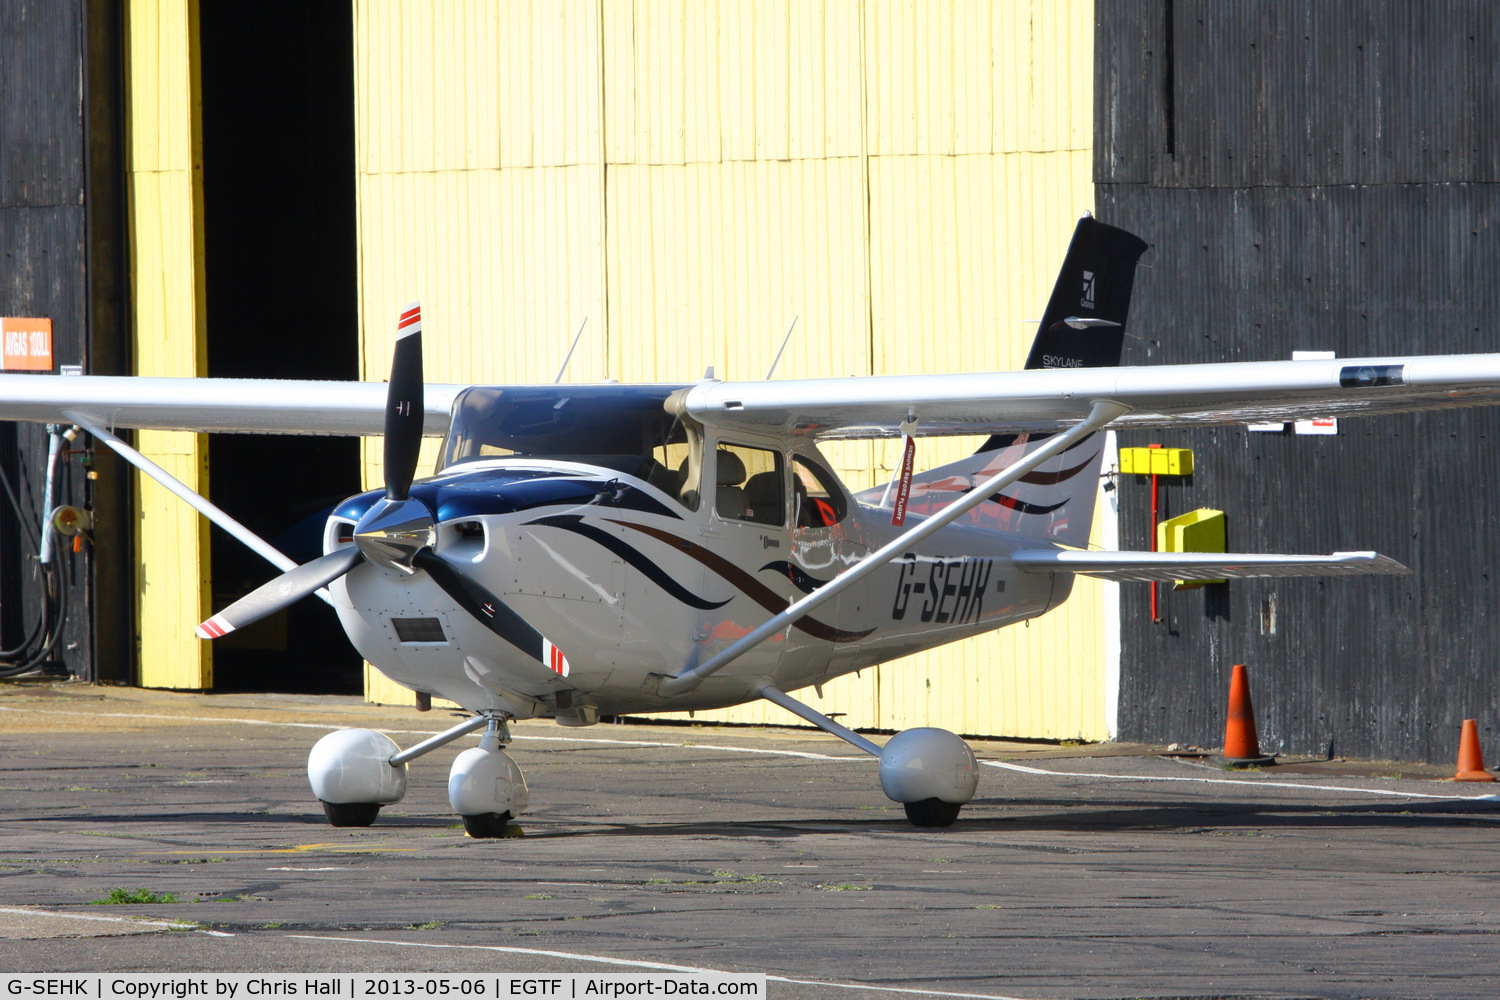 G-SEHK, 2008 Cessna 182T Skylane C/N 18282132, privately owned